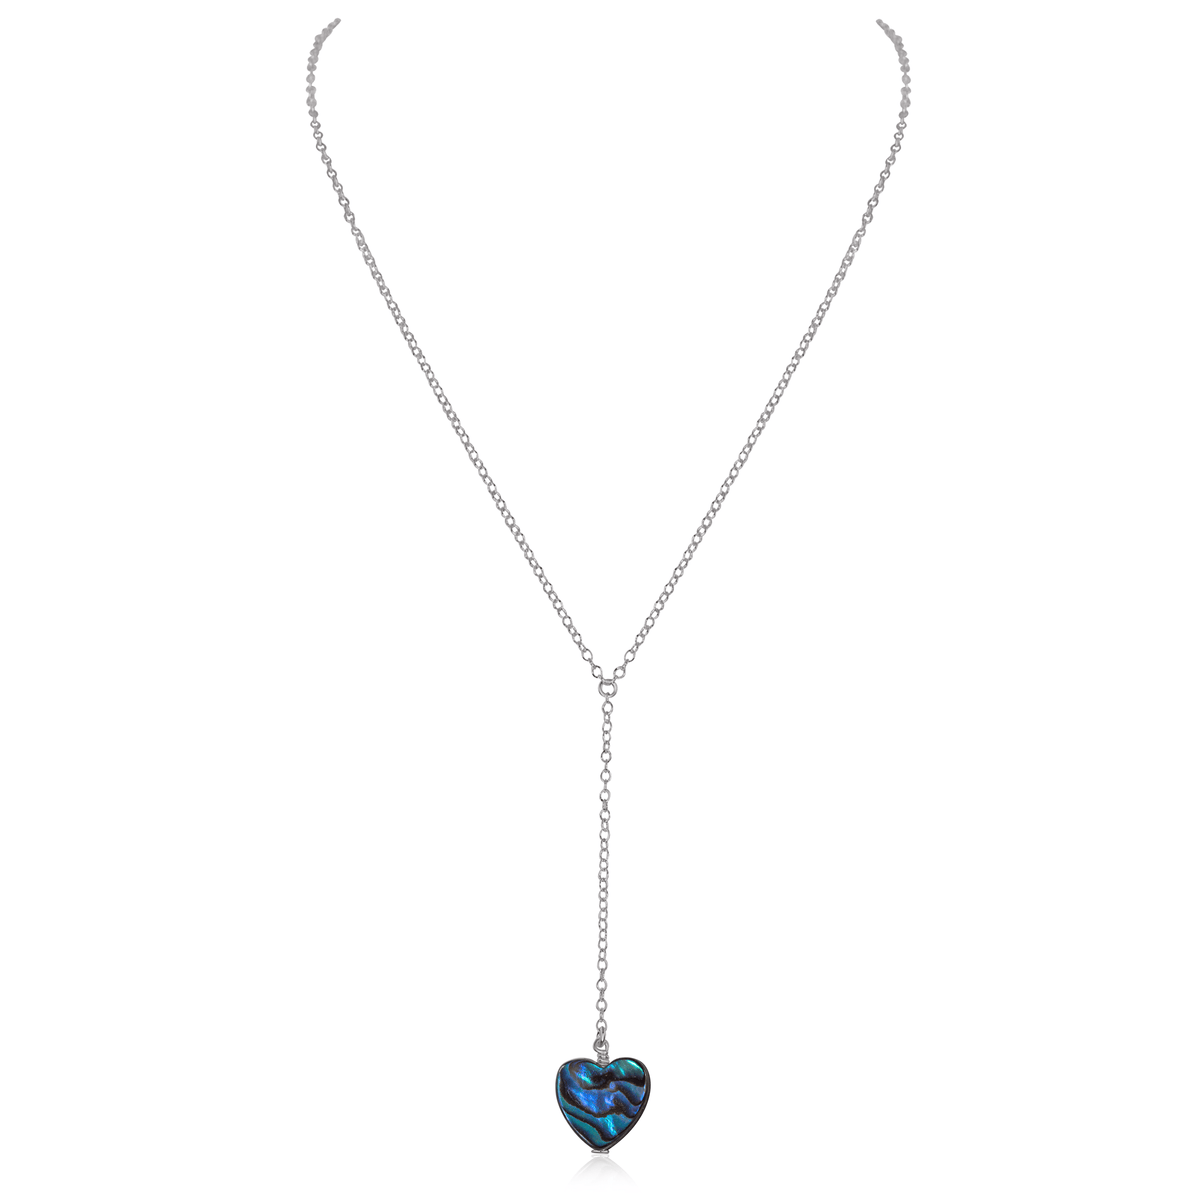 Abalone Shell Heart Lariat Necklace - Abalone Shell Heart Lariat Necklace - Stainless Steel - Luna Tide Handmade Crystal Jewellery